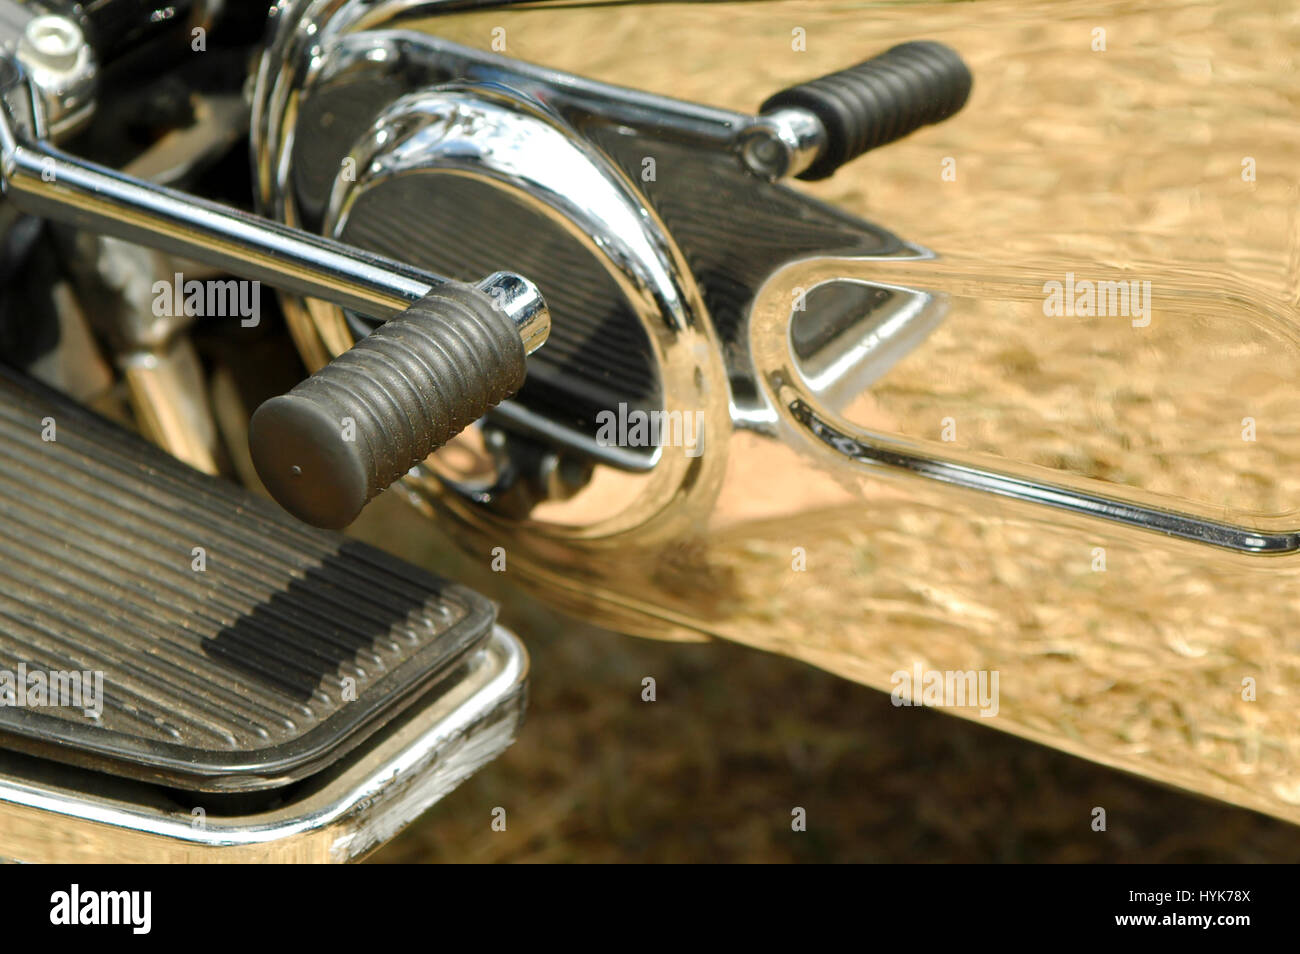 Motorrad schalthebel -Fotos und -Bildmaterial in hoher Auflösung – Alamy